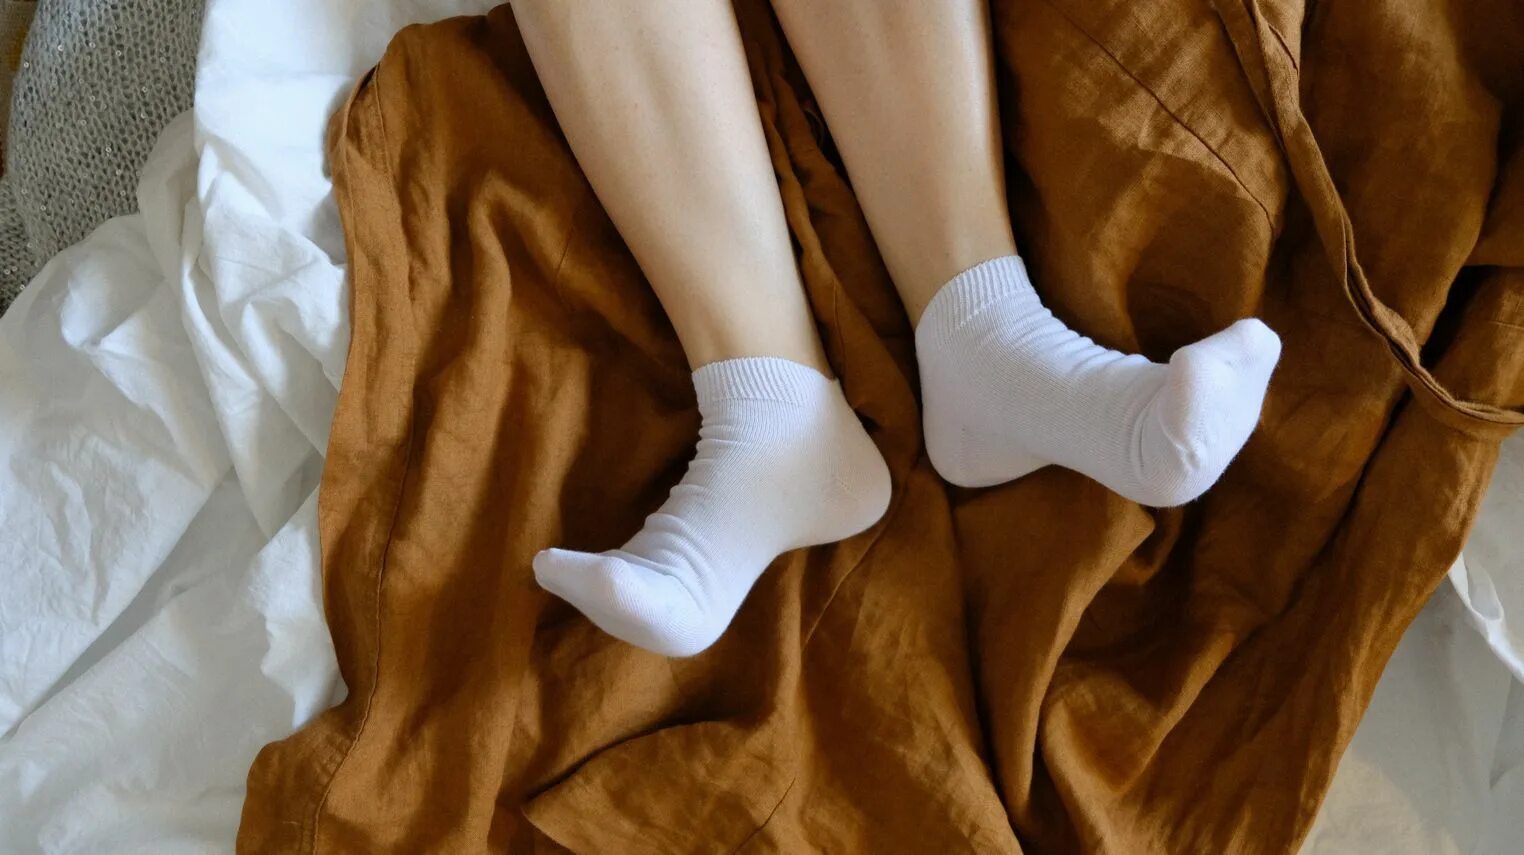 Розово белые носки. Ножки в носочках. Белые носки. Носочки белые женские. Ступни в носочках.